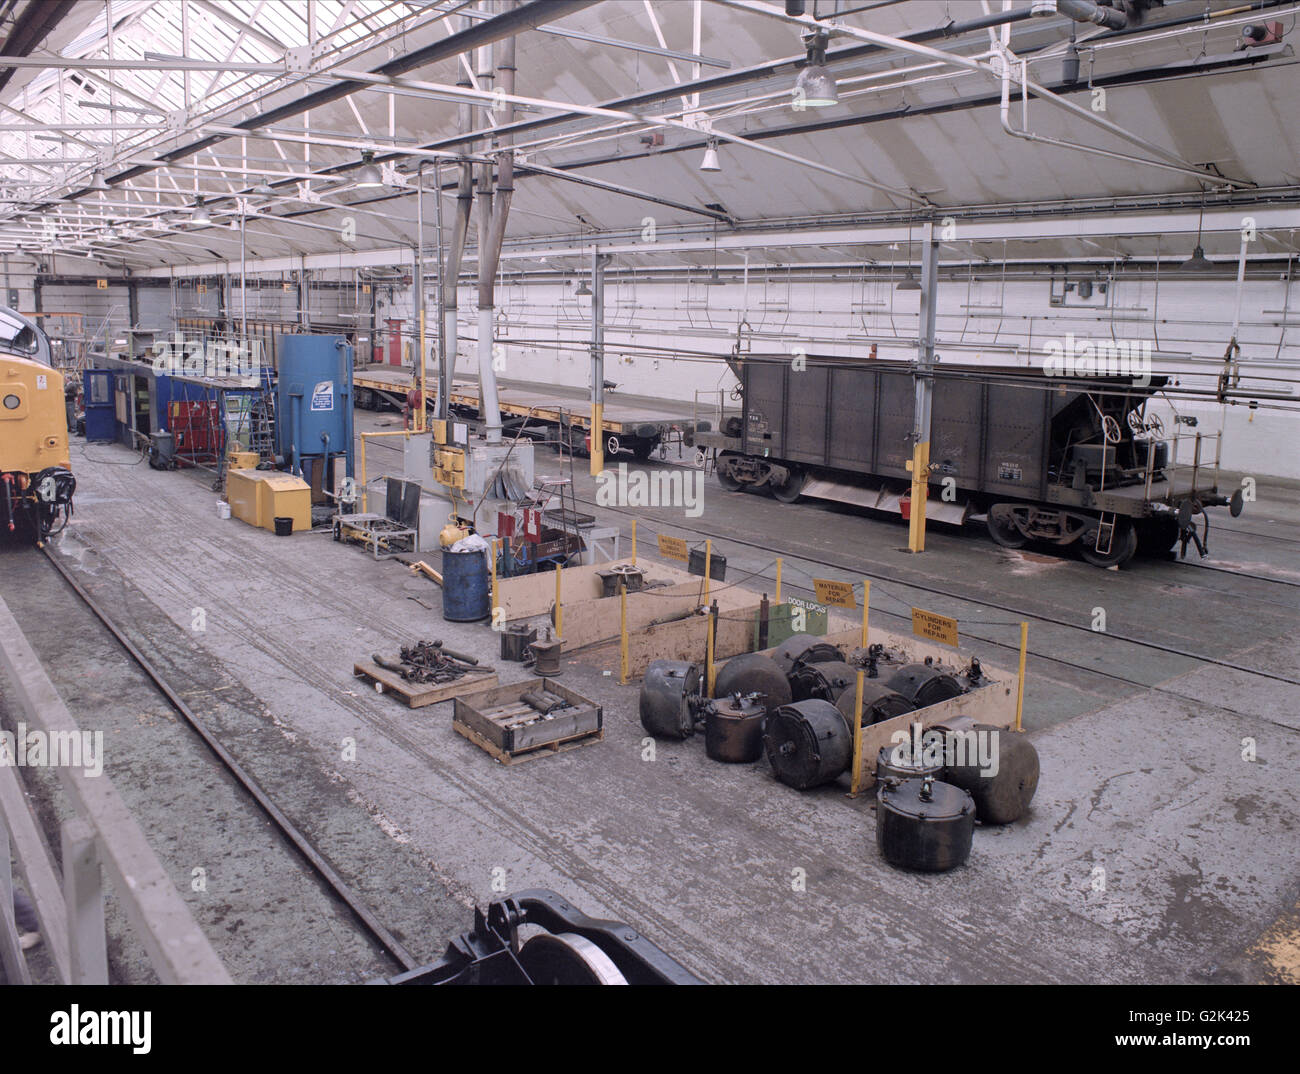 Interior of Railway Workshops Stock Photo